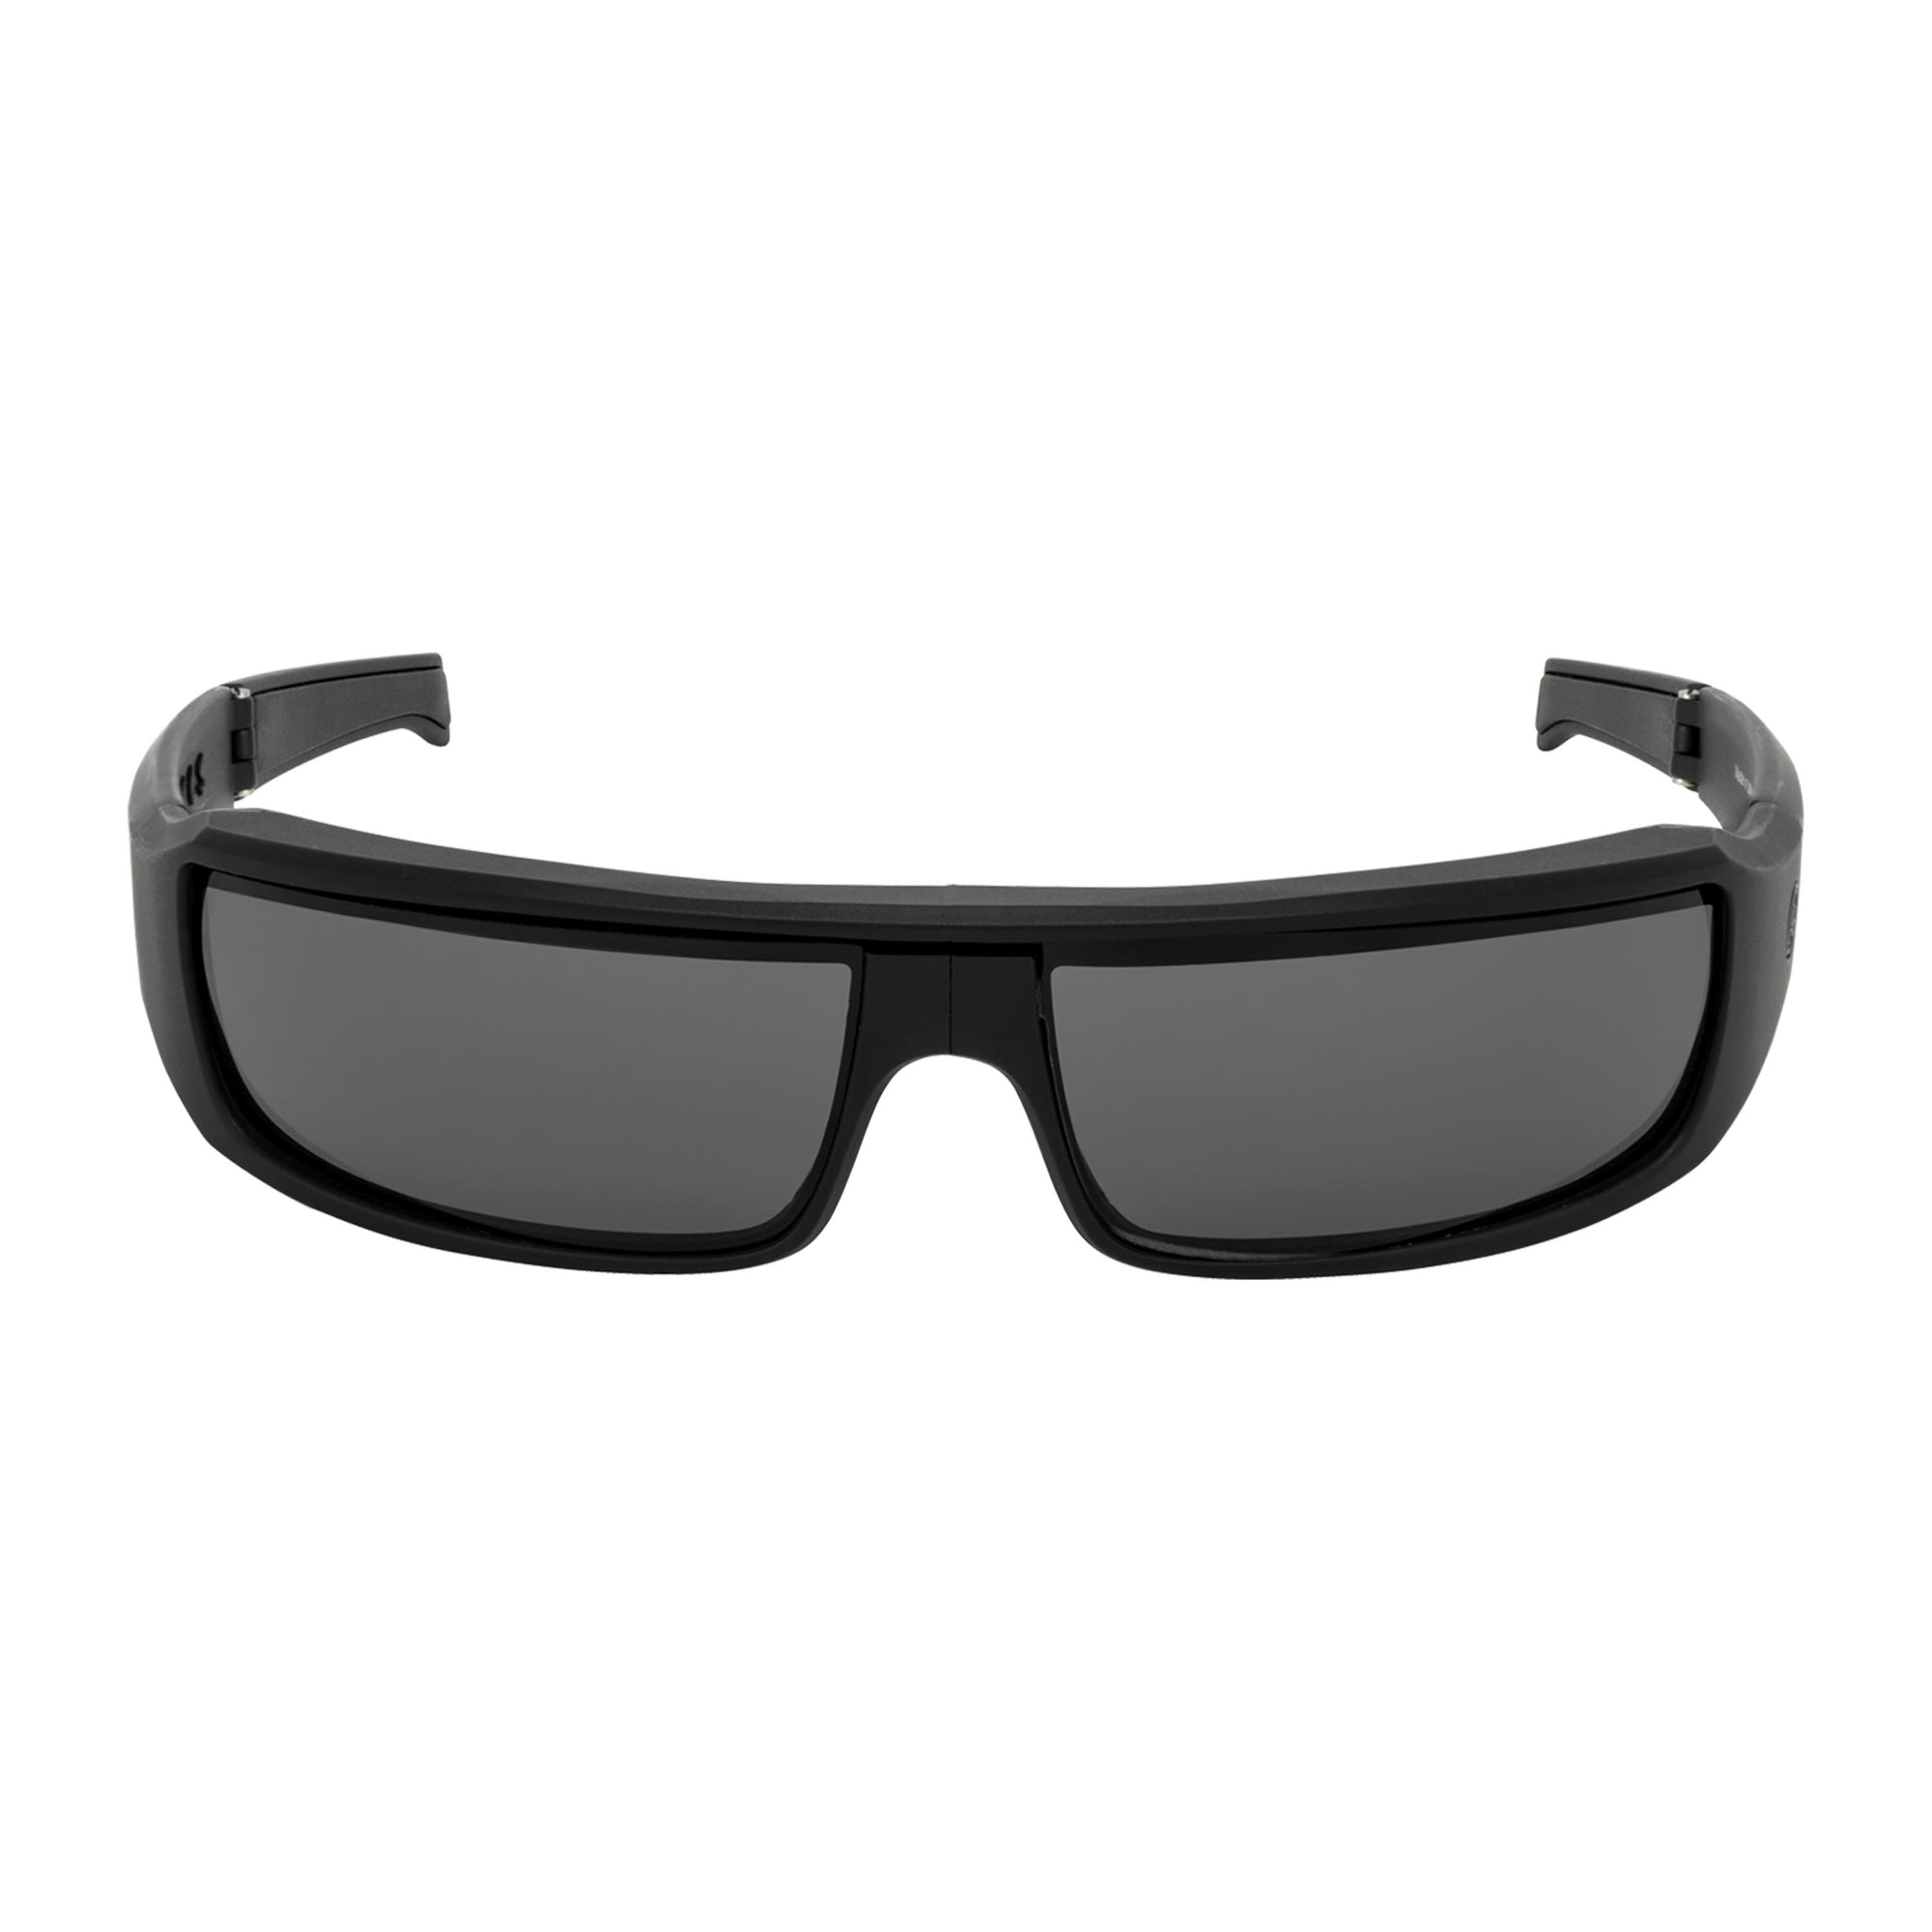 Popticals, Premium Compact Sunglasses, PopSign, 010020-BMGS, Standard Sunglasses, Matte Black Frame, Gray Lenses, Front View